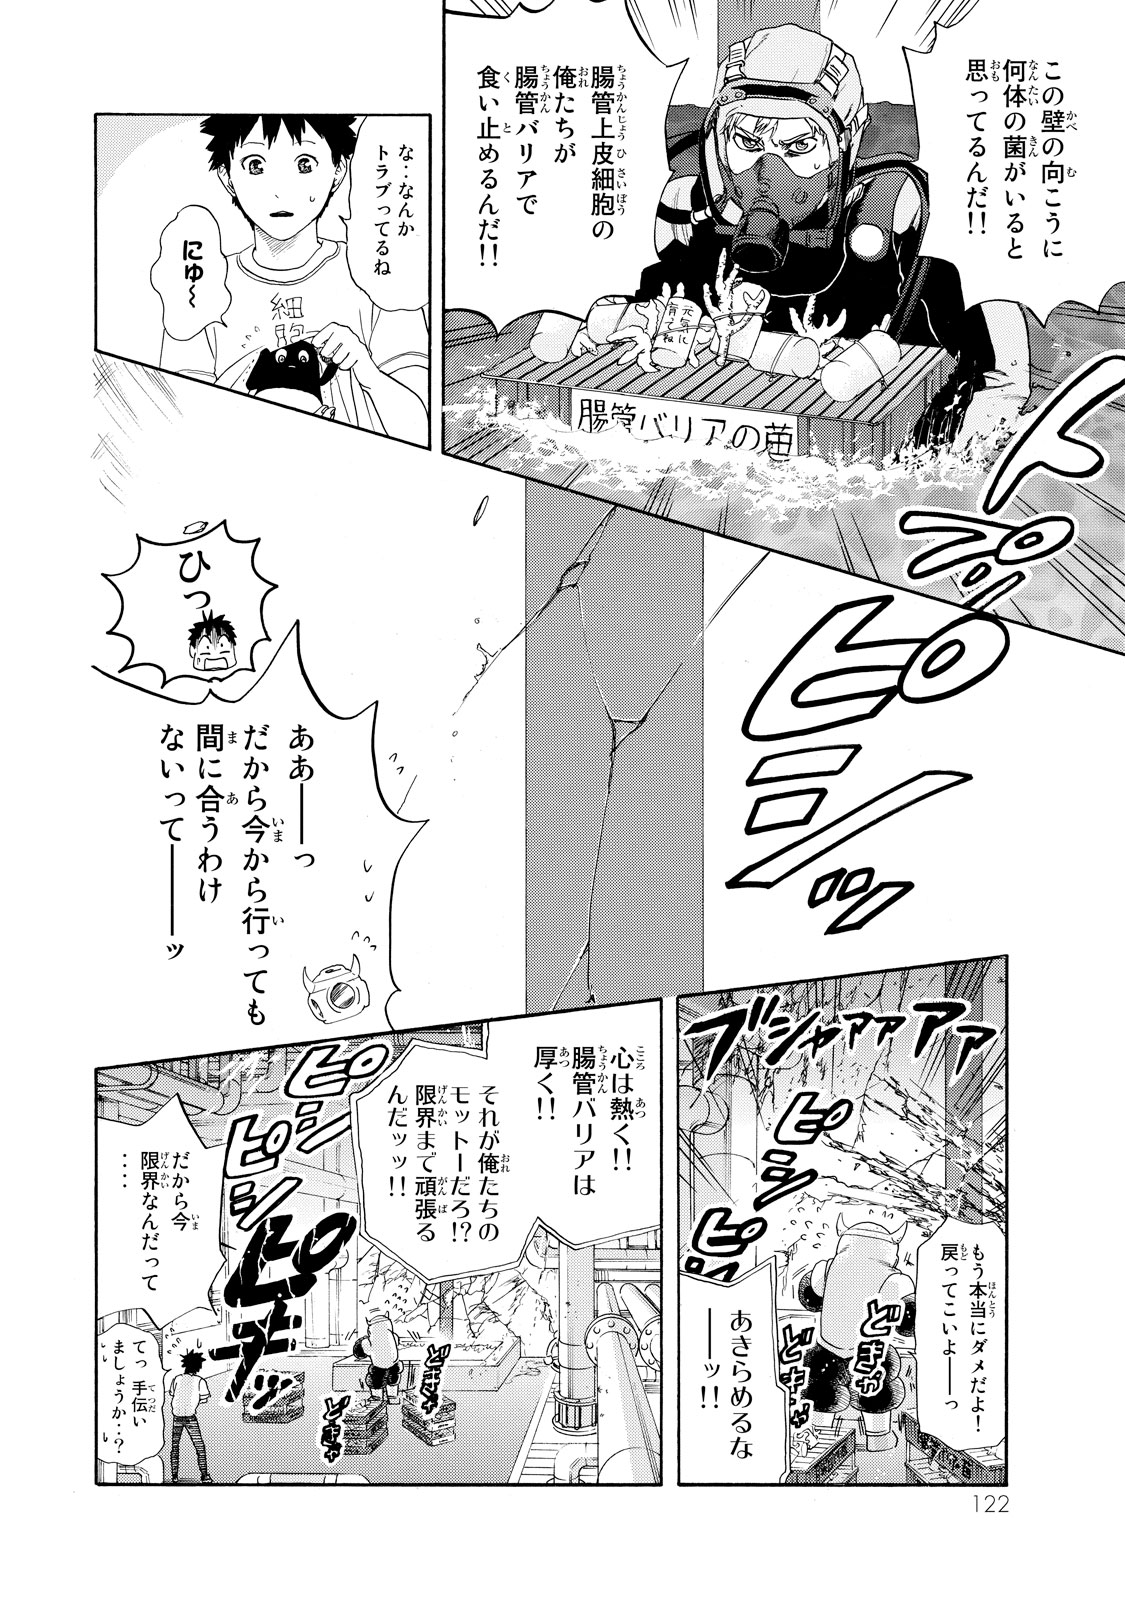 Hataraku Saibou - Chapter 23 - Page 16